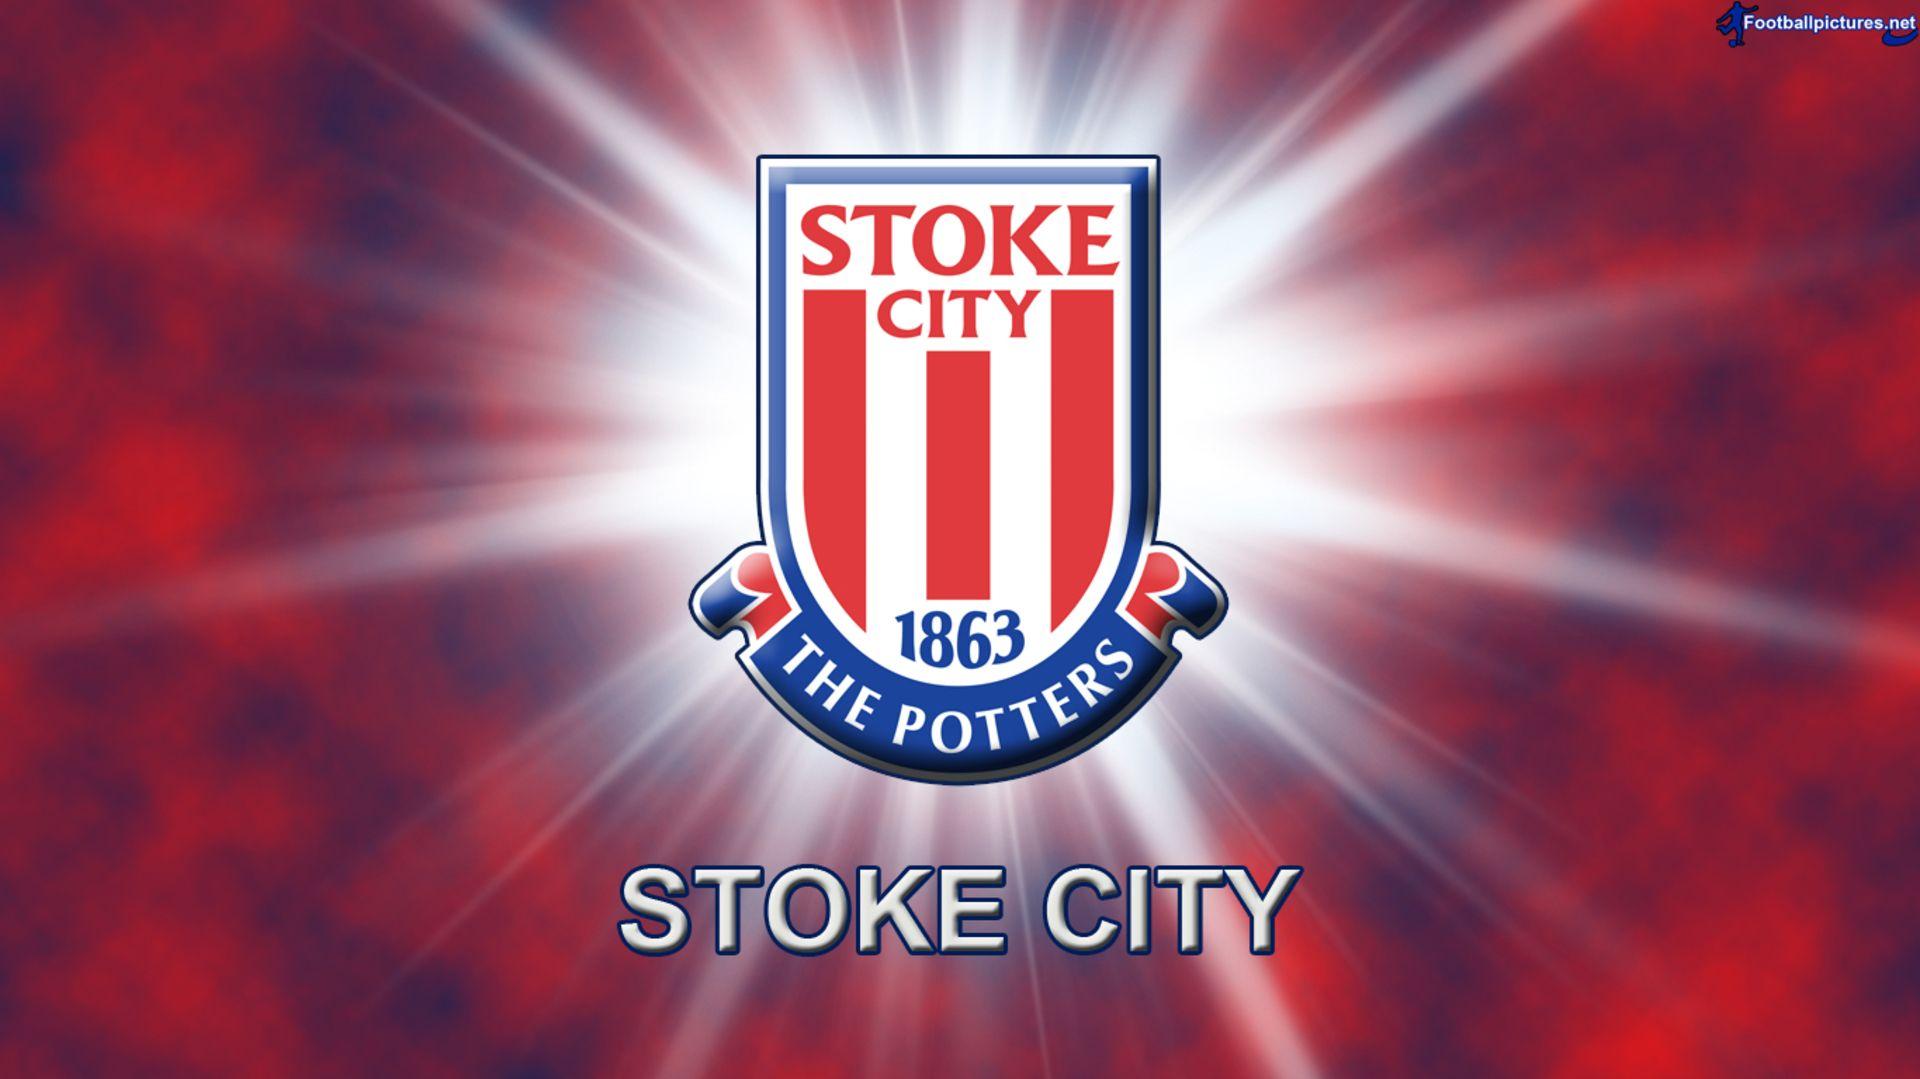 Stoke City Logo - Image - Stoke City logo wallpaper 001.jpg | Football Wiki | FANDOM ...